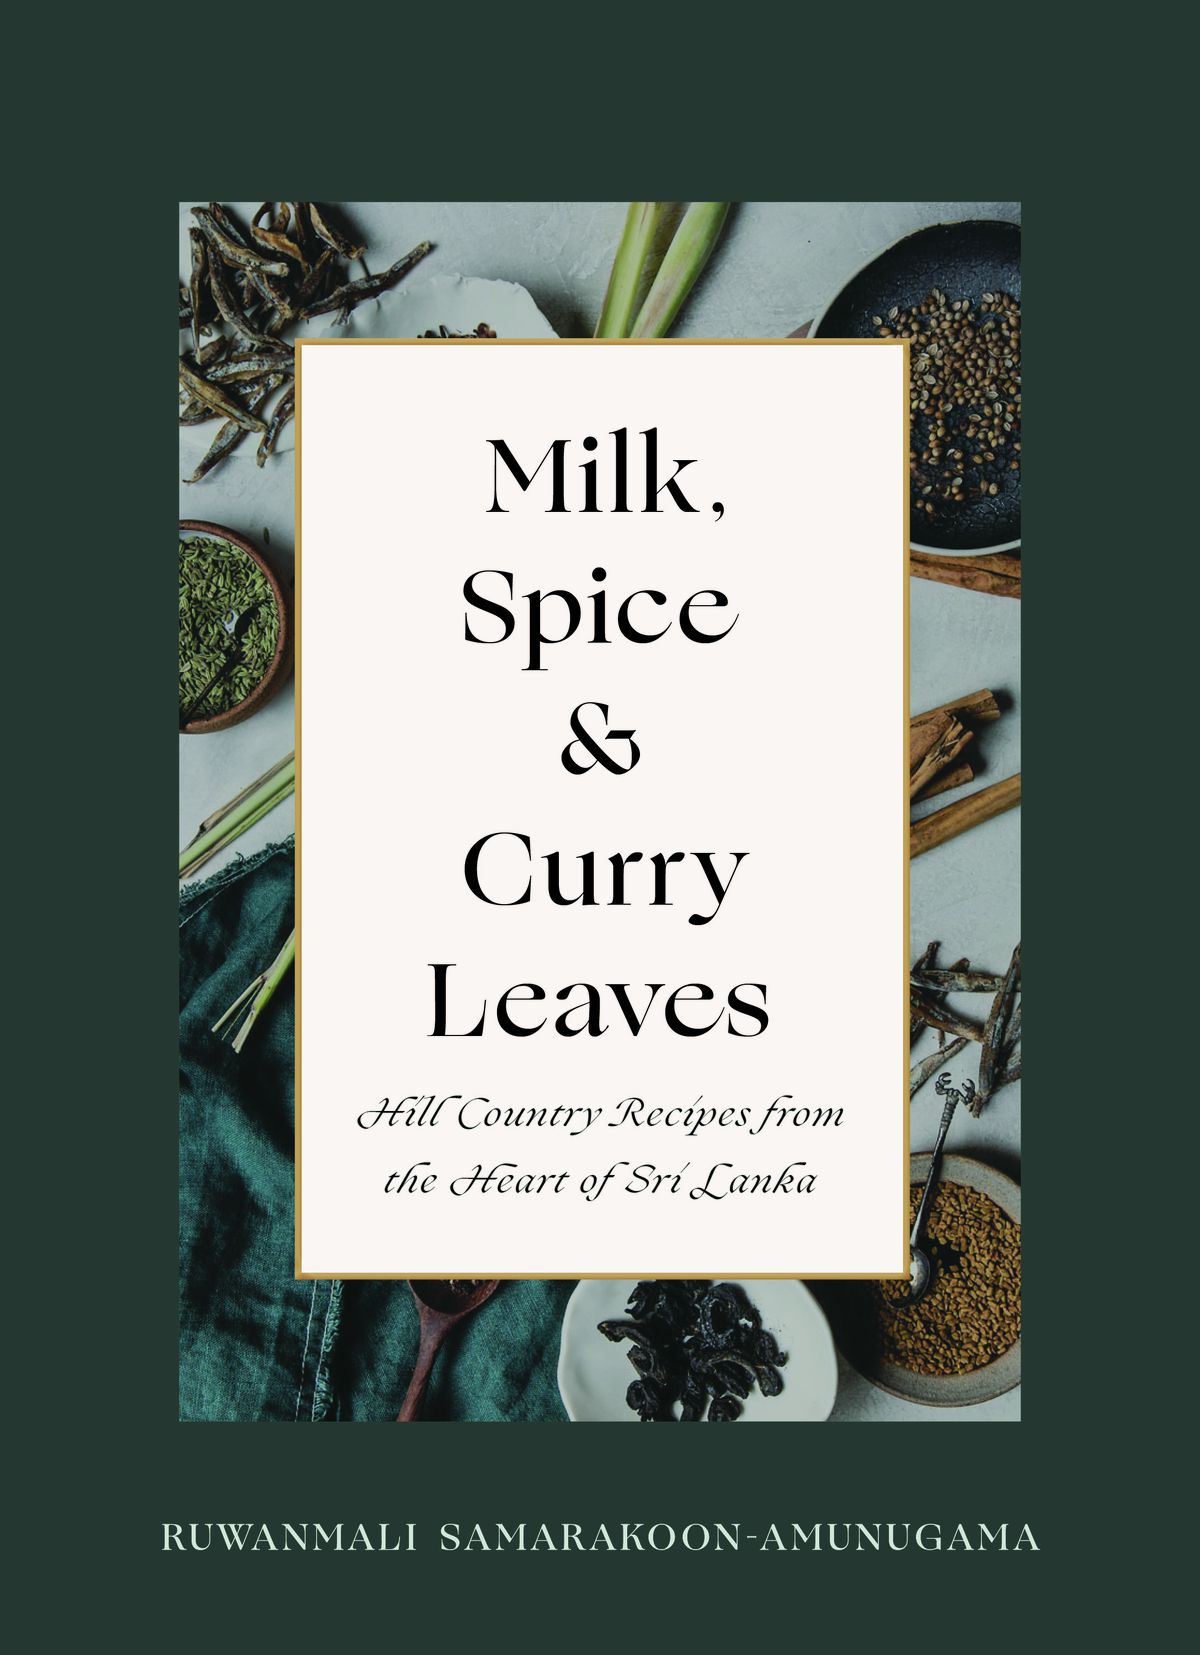 The cover of Milk, Spice, and Curry Leaves by Ruwanmali Samarakoon-Amunugama